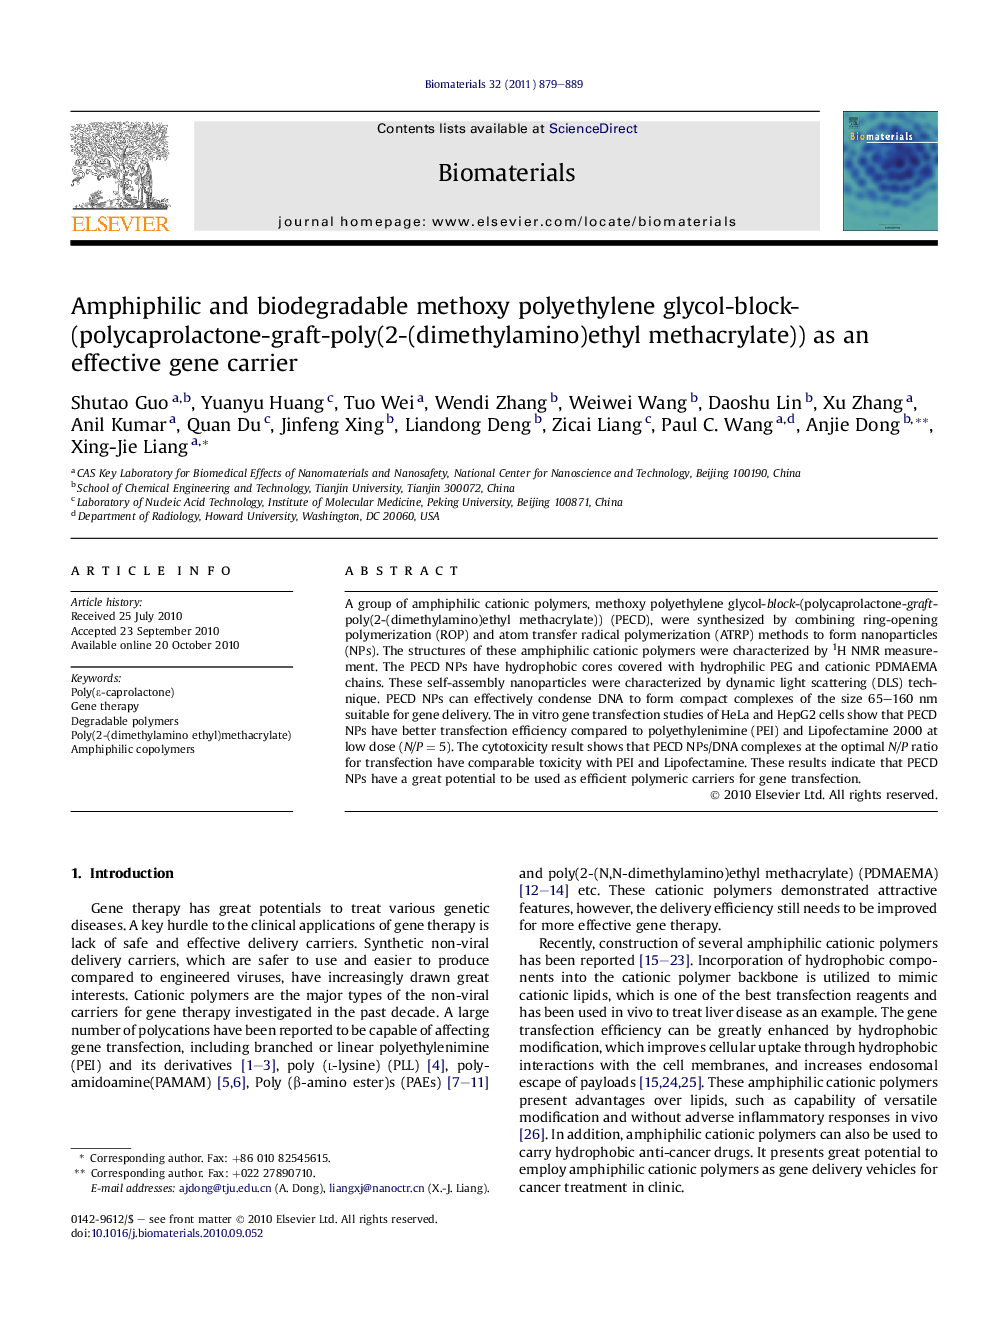 Amphiphilic and biodegradable methoxy polyethylene glycol-block-(polycaprolactone-graft-poly(2-(dimethylamino)ethyl methacrylate)) as an effective gene carrier